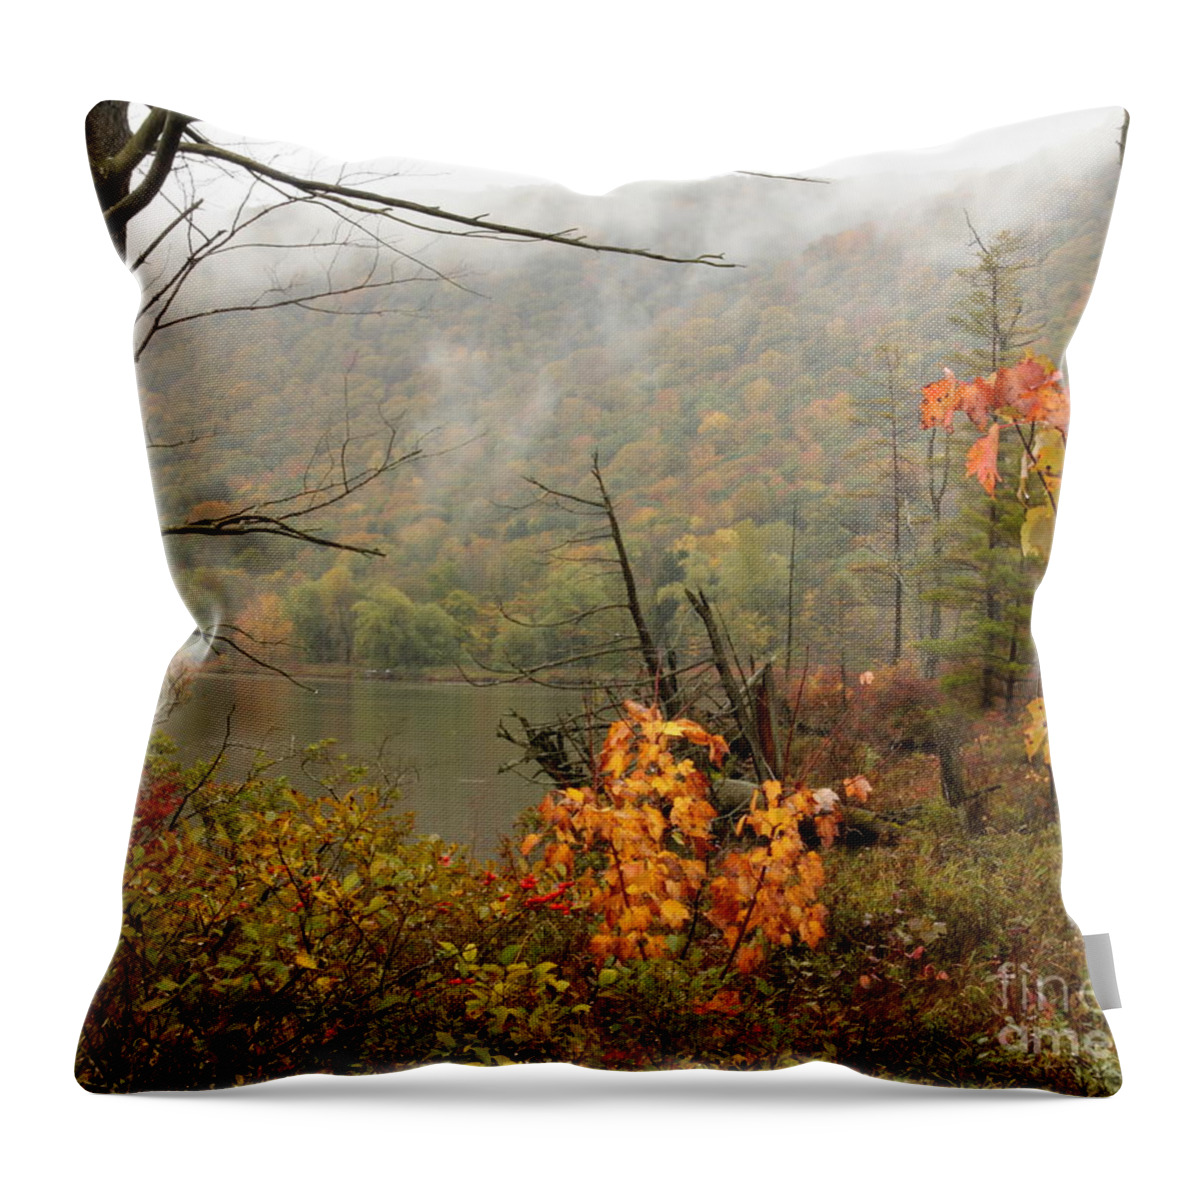 Mist Throw Pillow featuring the photograph Autumn Mist by Rod Best